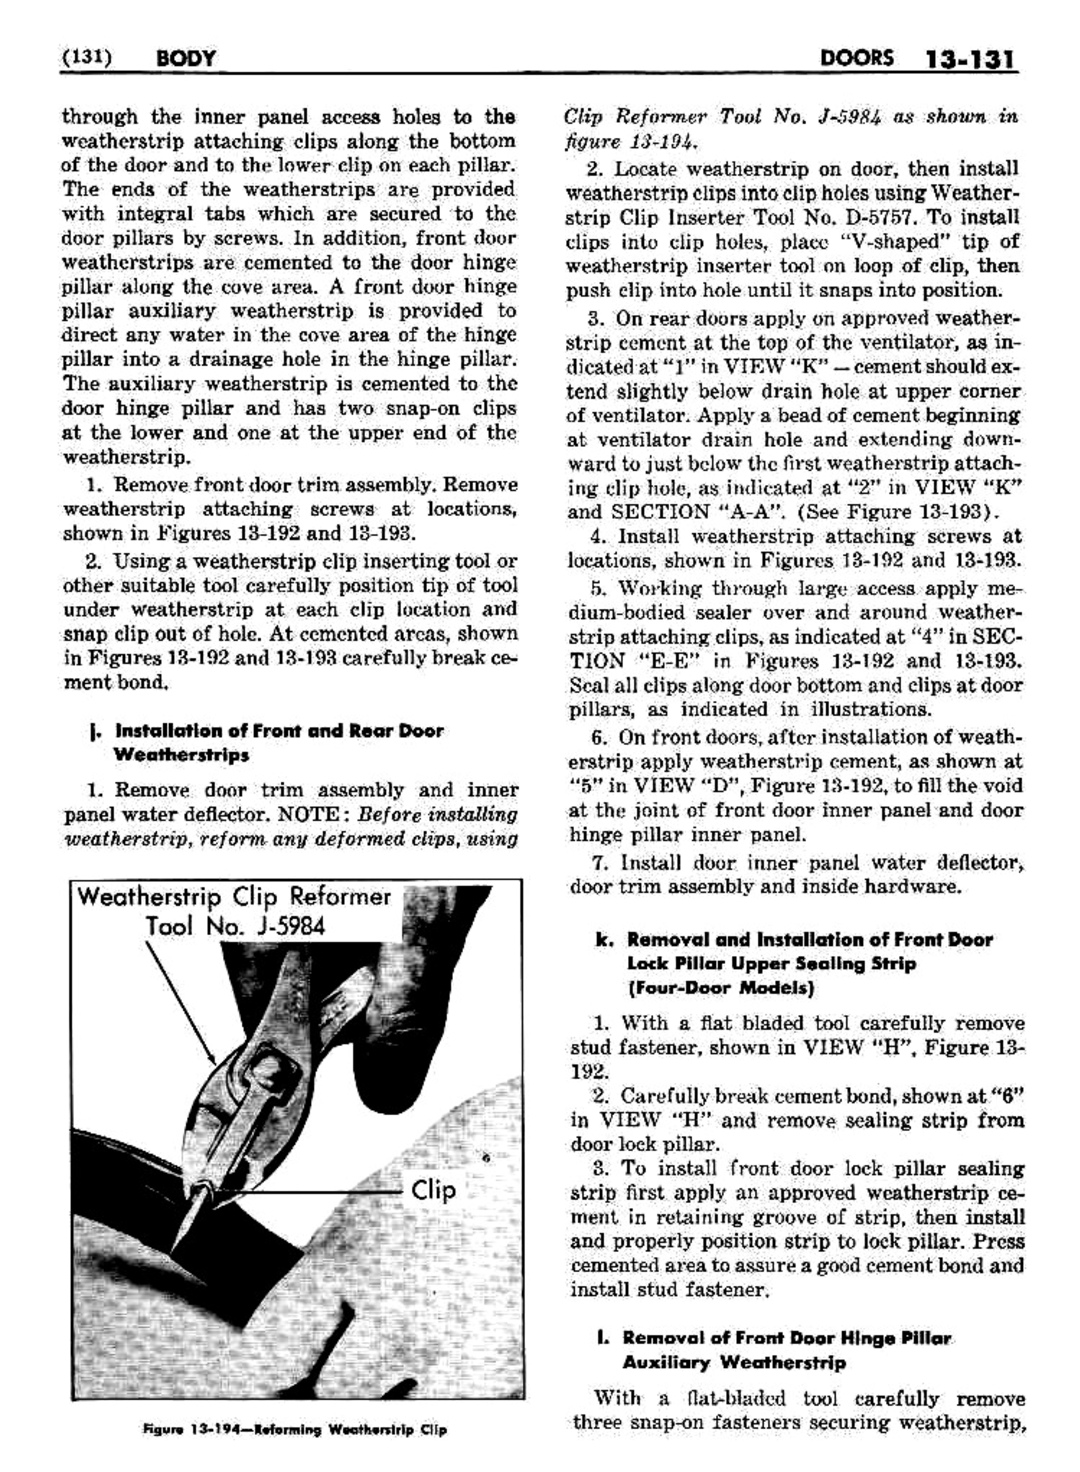 n_1958 Buick Body Service Manual-132-132.jpg